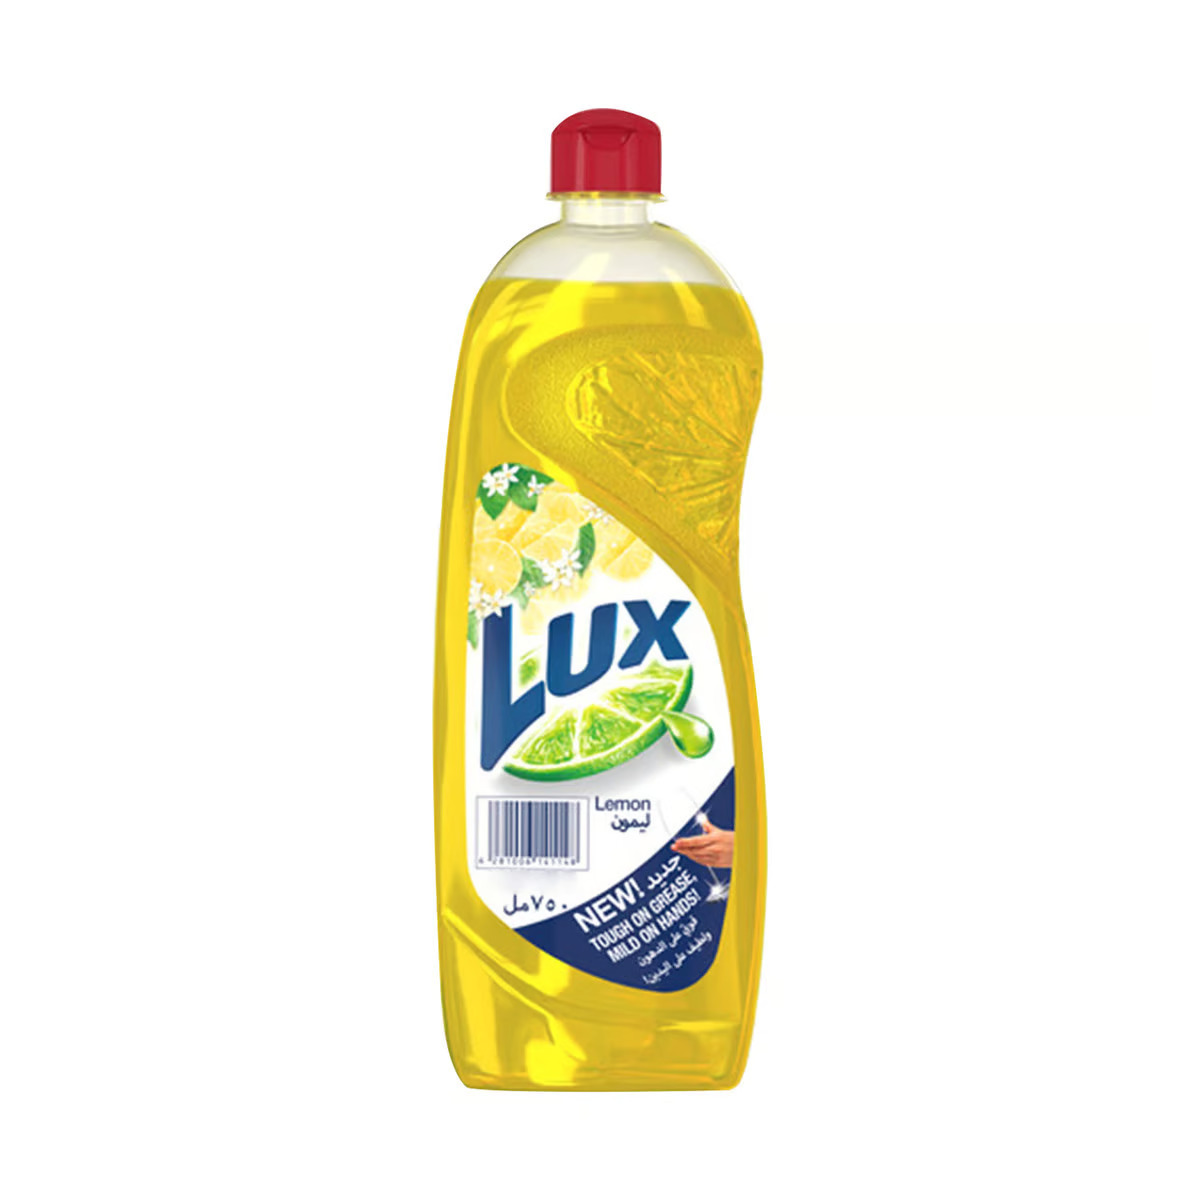 Lux Lemon Dishwashing Liquid Value Pack 3 x 725 ml